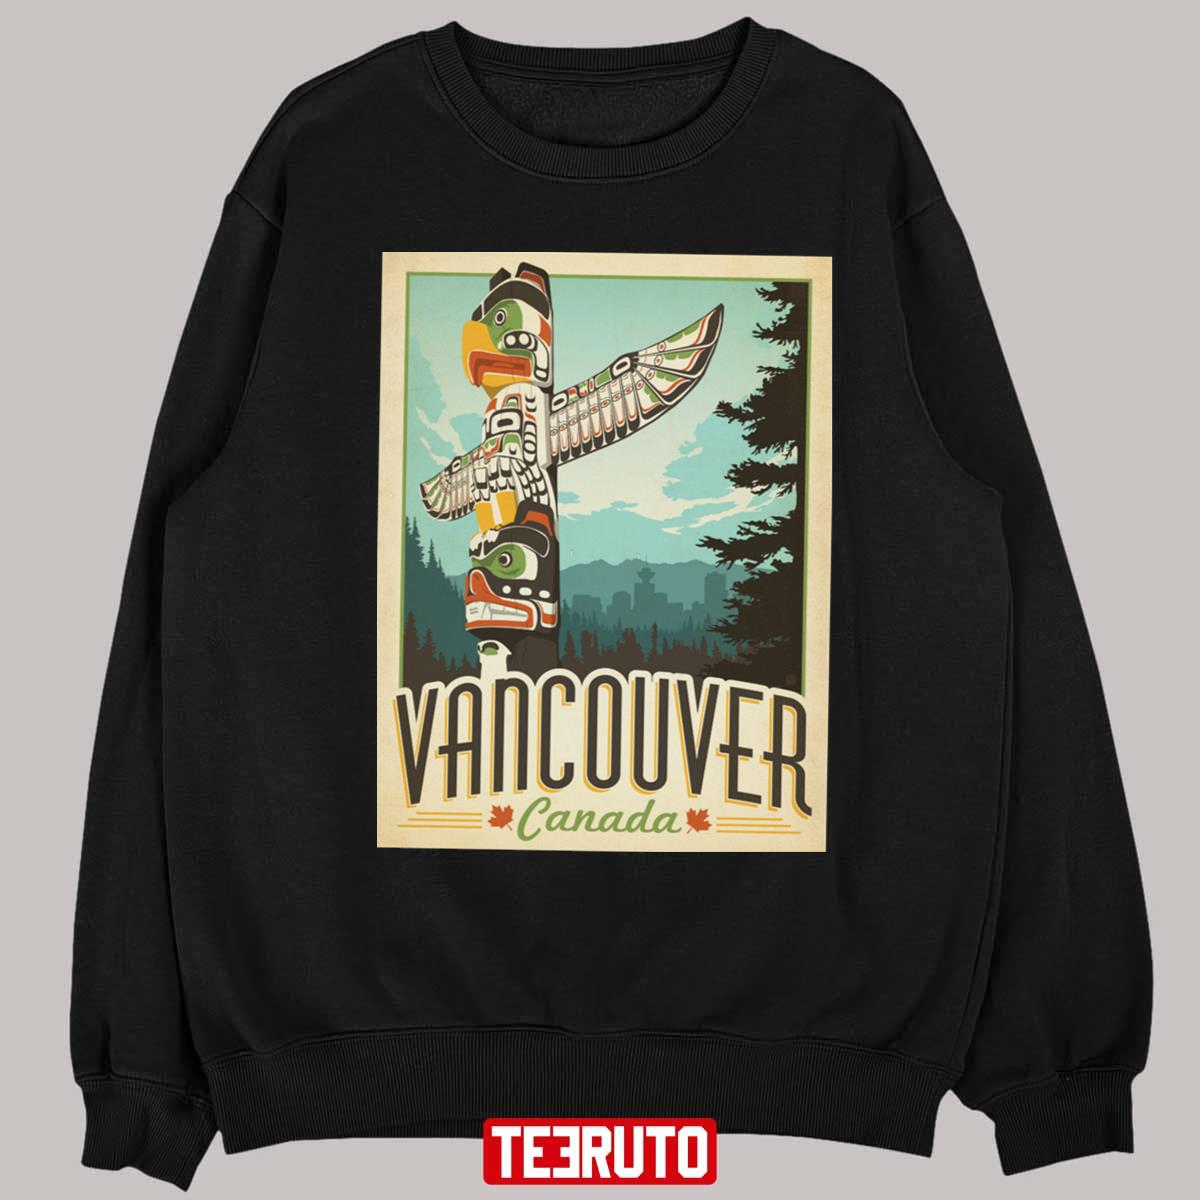 Vancouver Canada 90s Retro Art Unisex T-Shirt